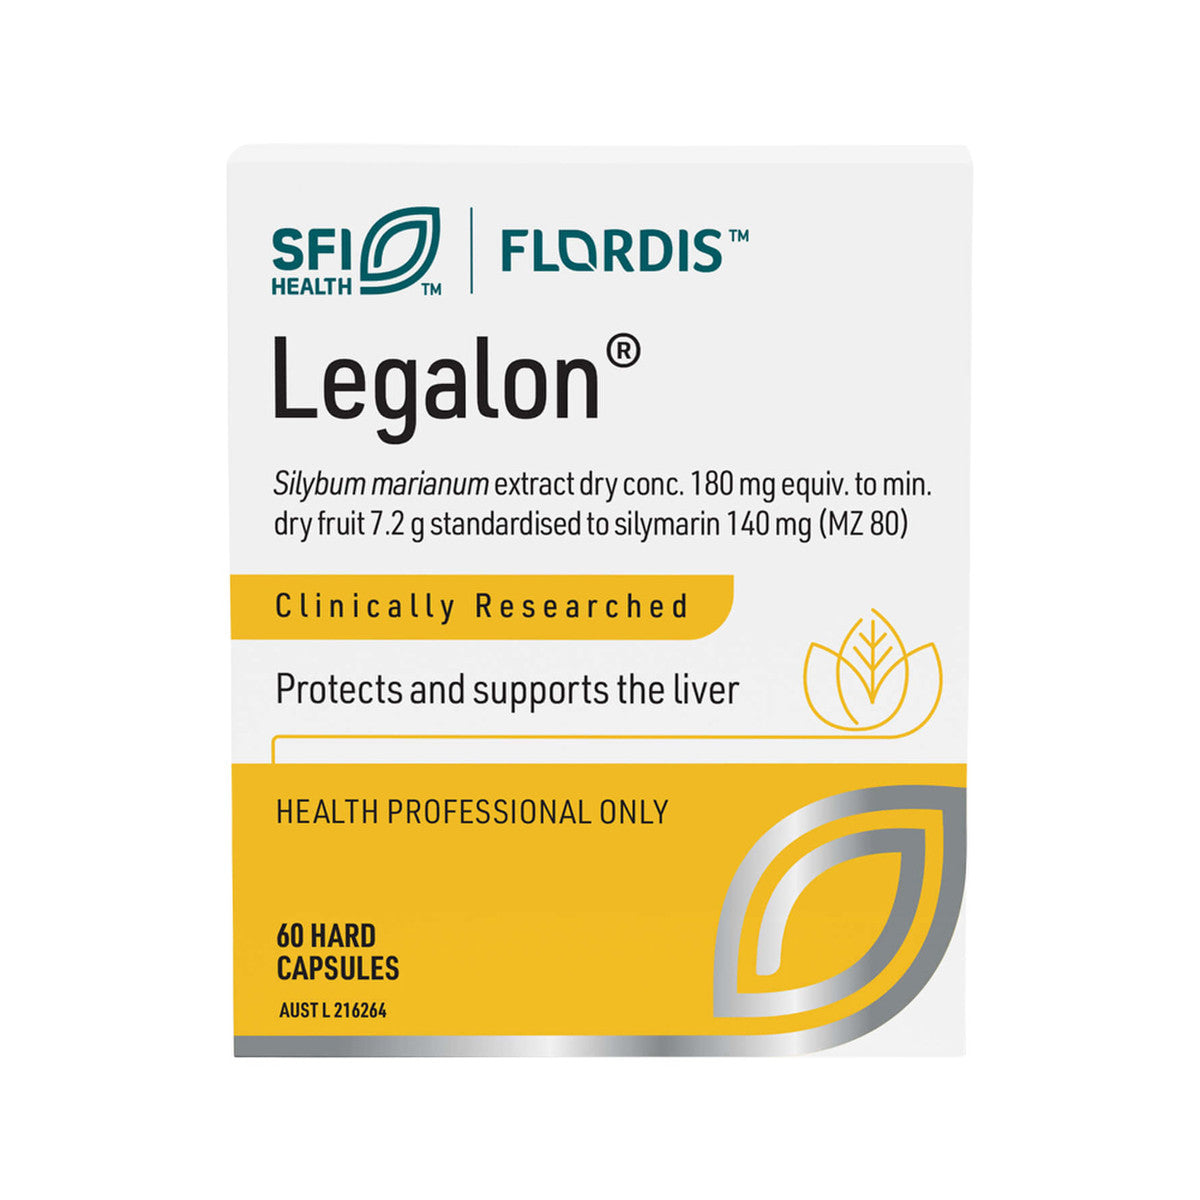 SFI Health Flordis - Legalon